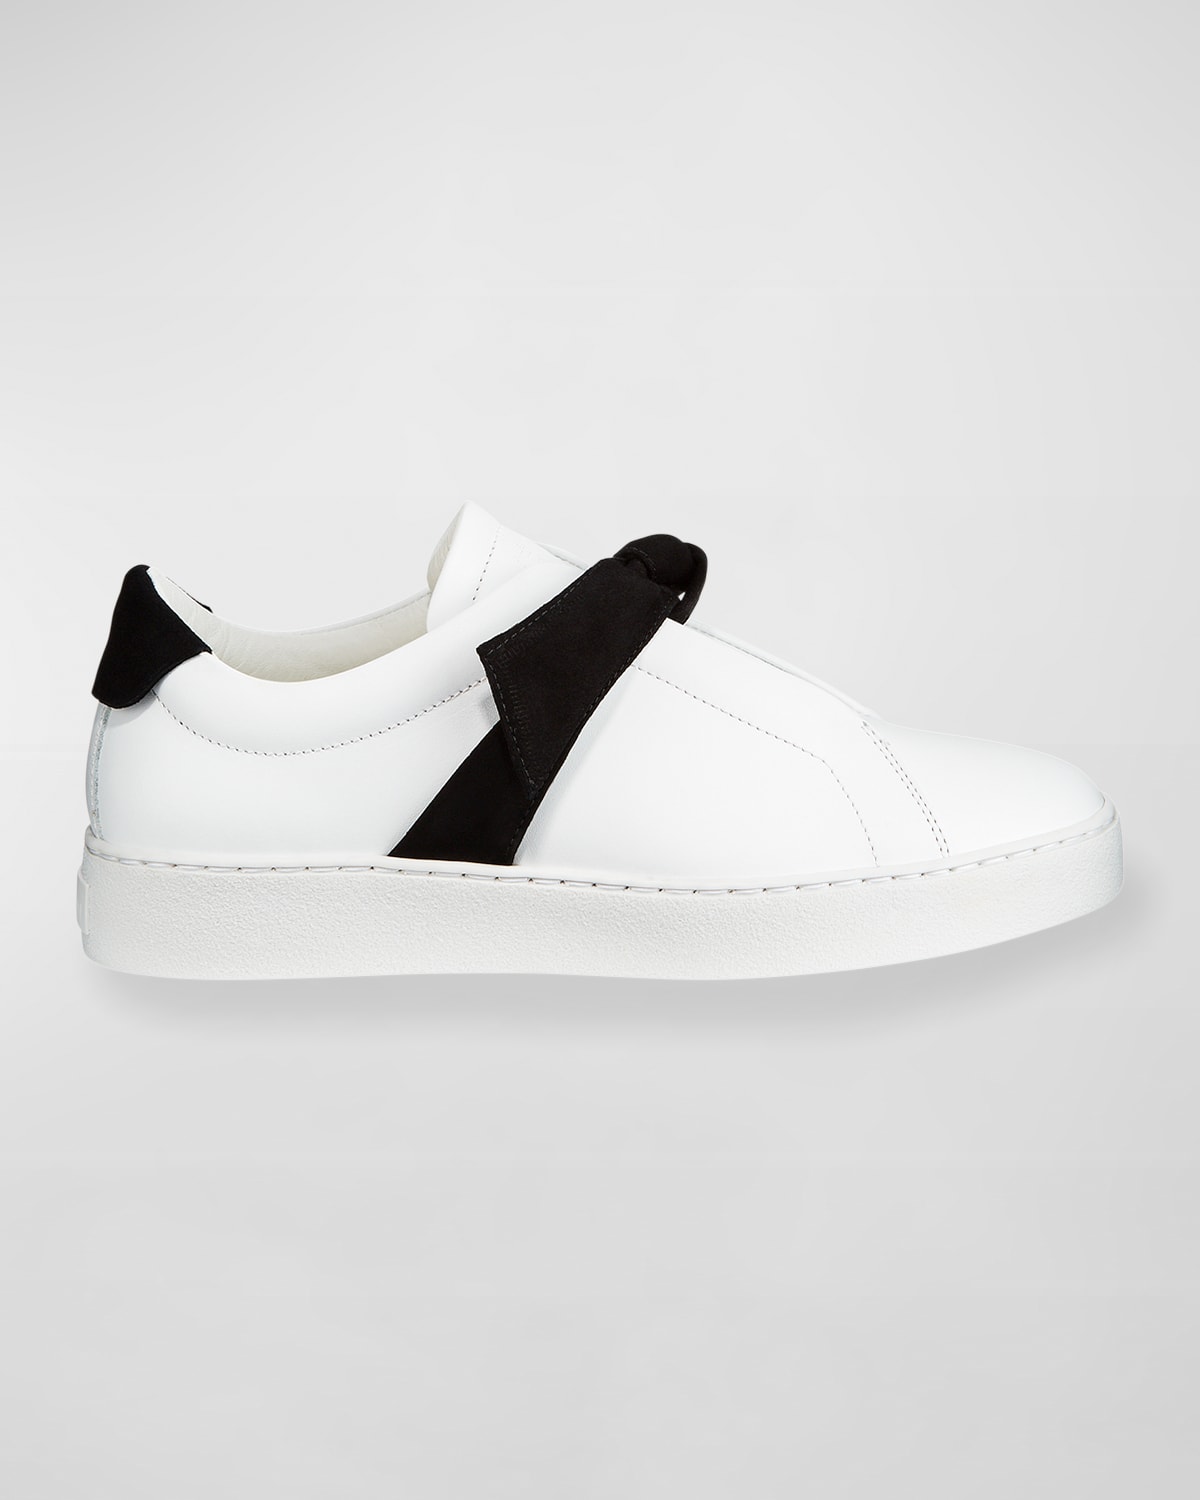 Clarita Two-Tone Sneakers, White/Black